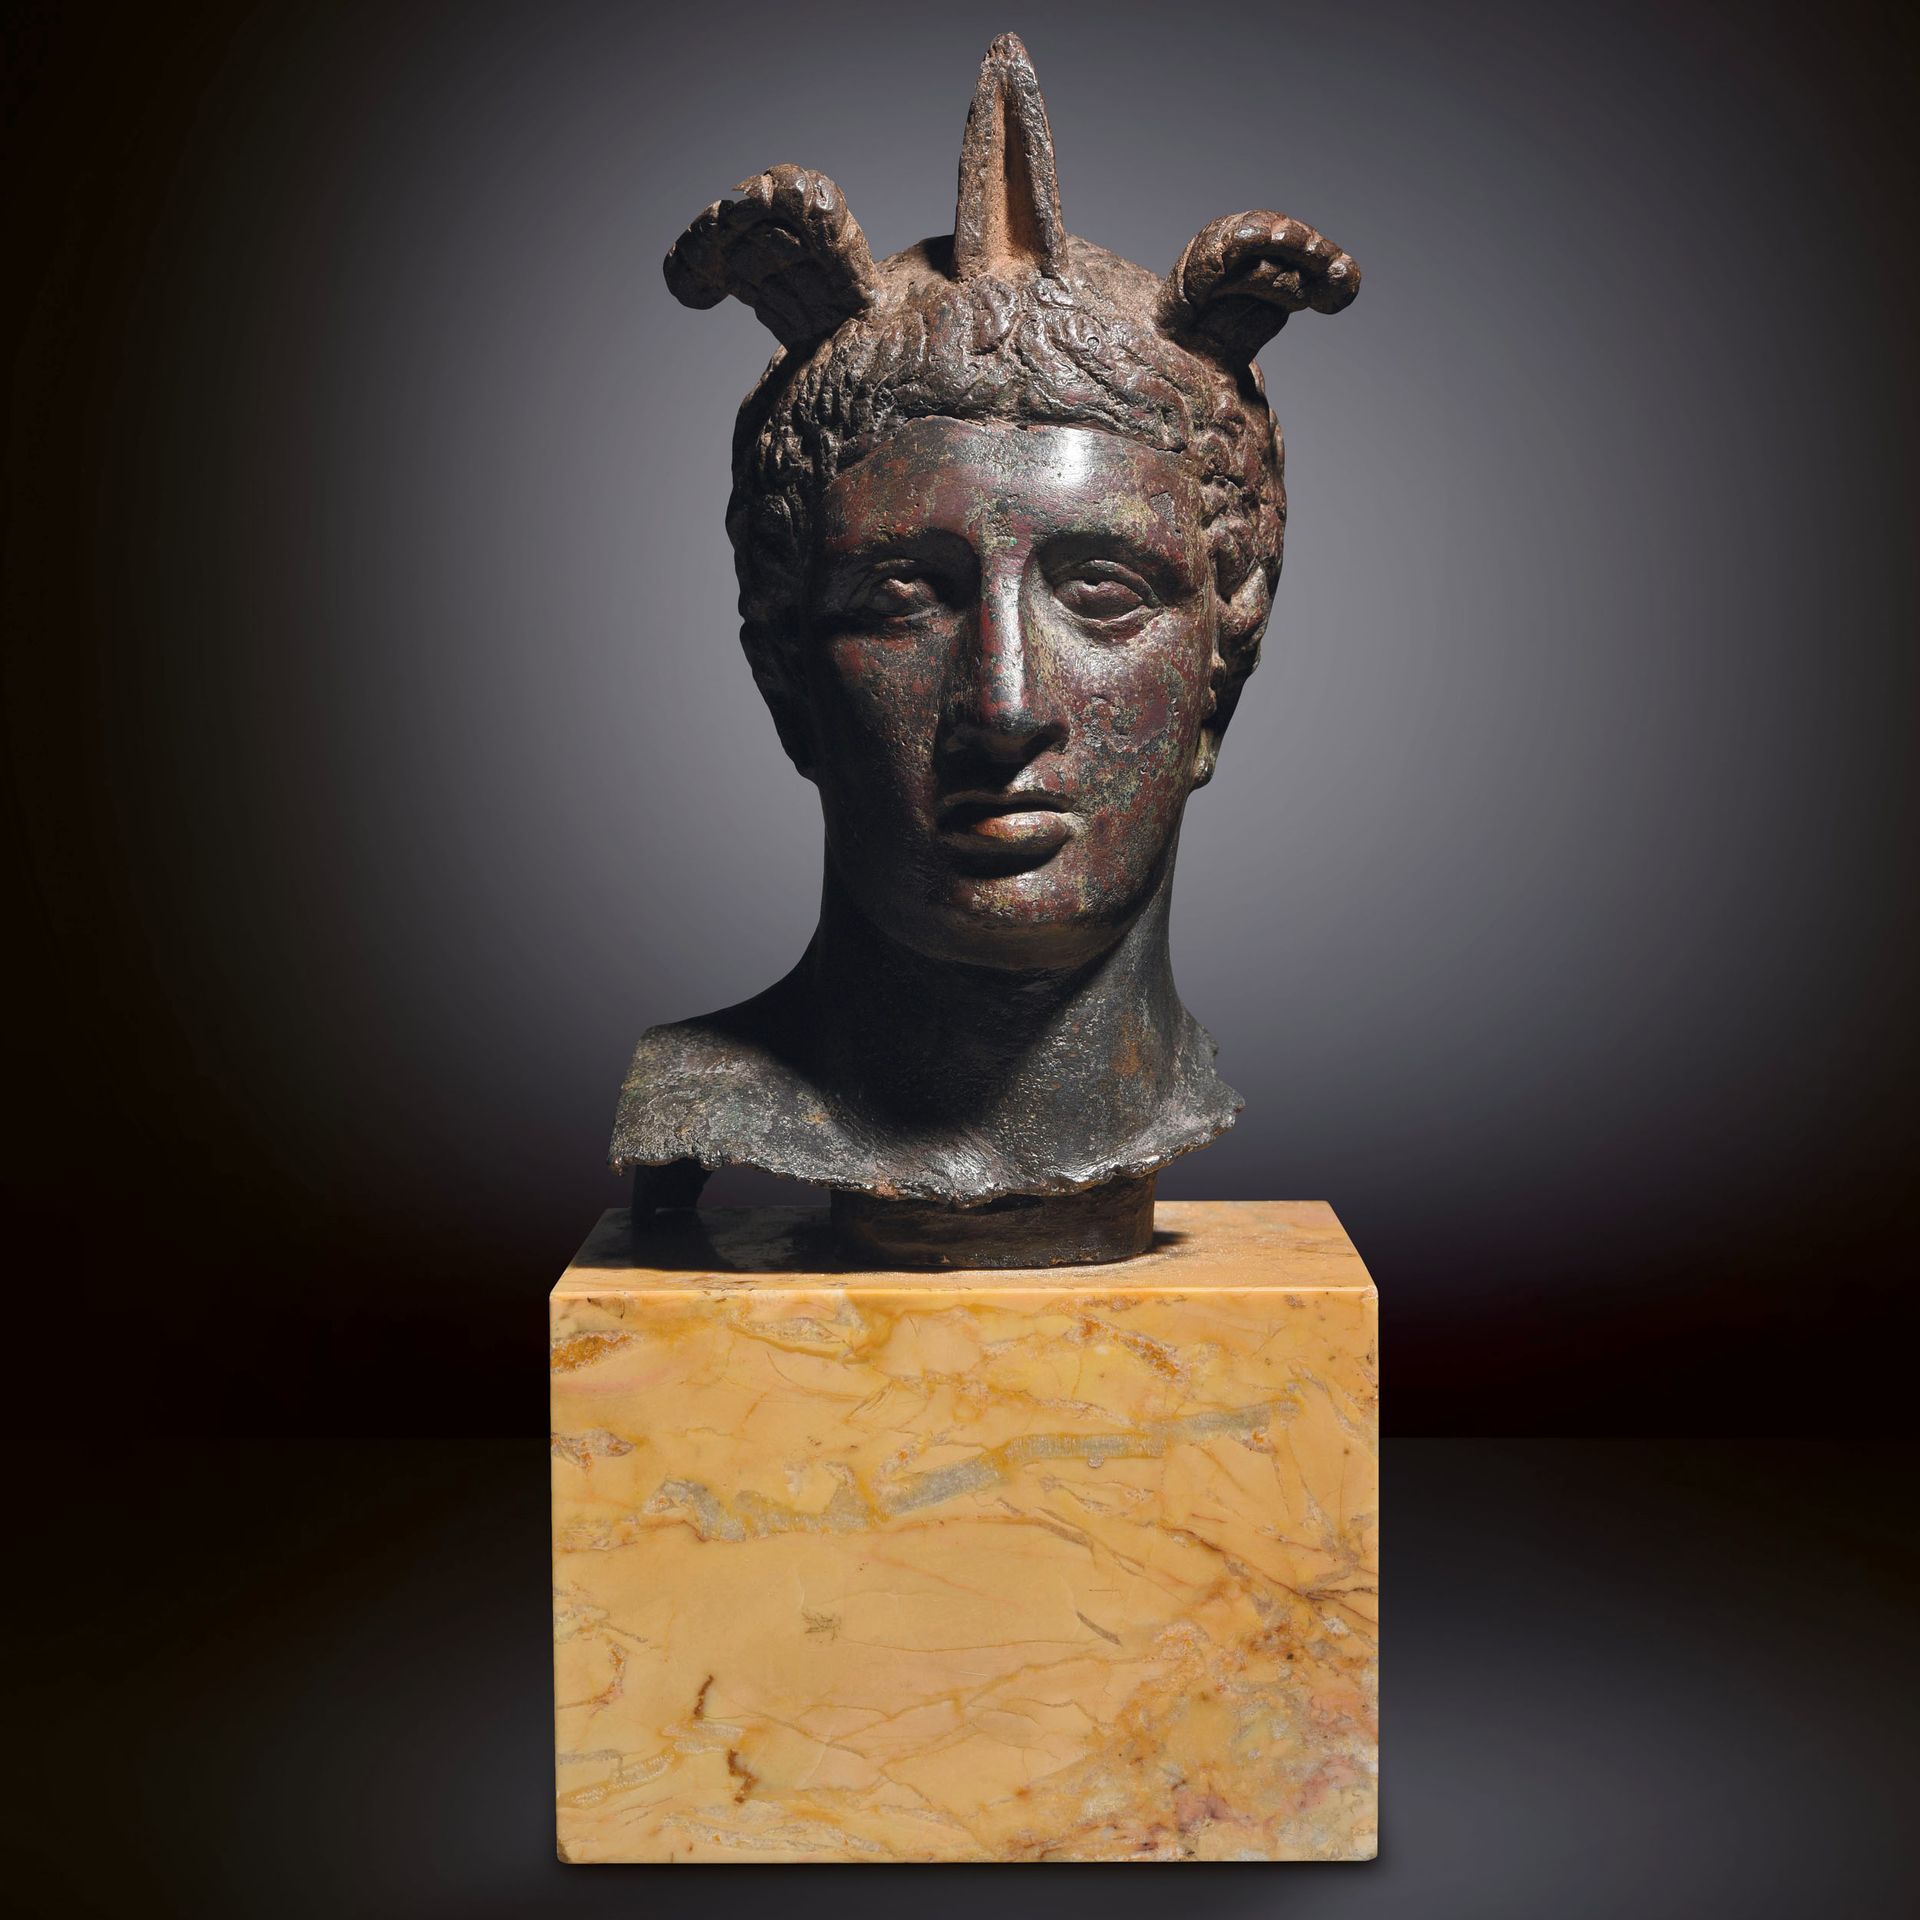 Null BUSTE DU DIEU MERCURE

Art romain, Ier - IIe s. Ap. J.-C. 

Bronze à patine&hellip;